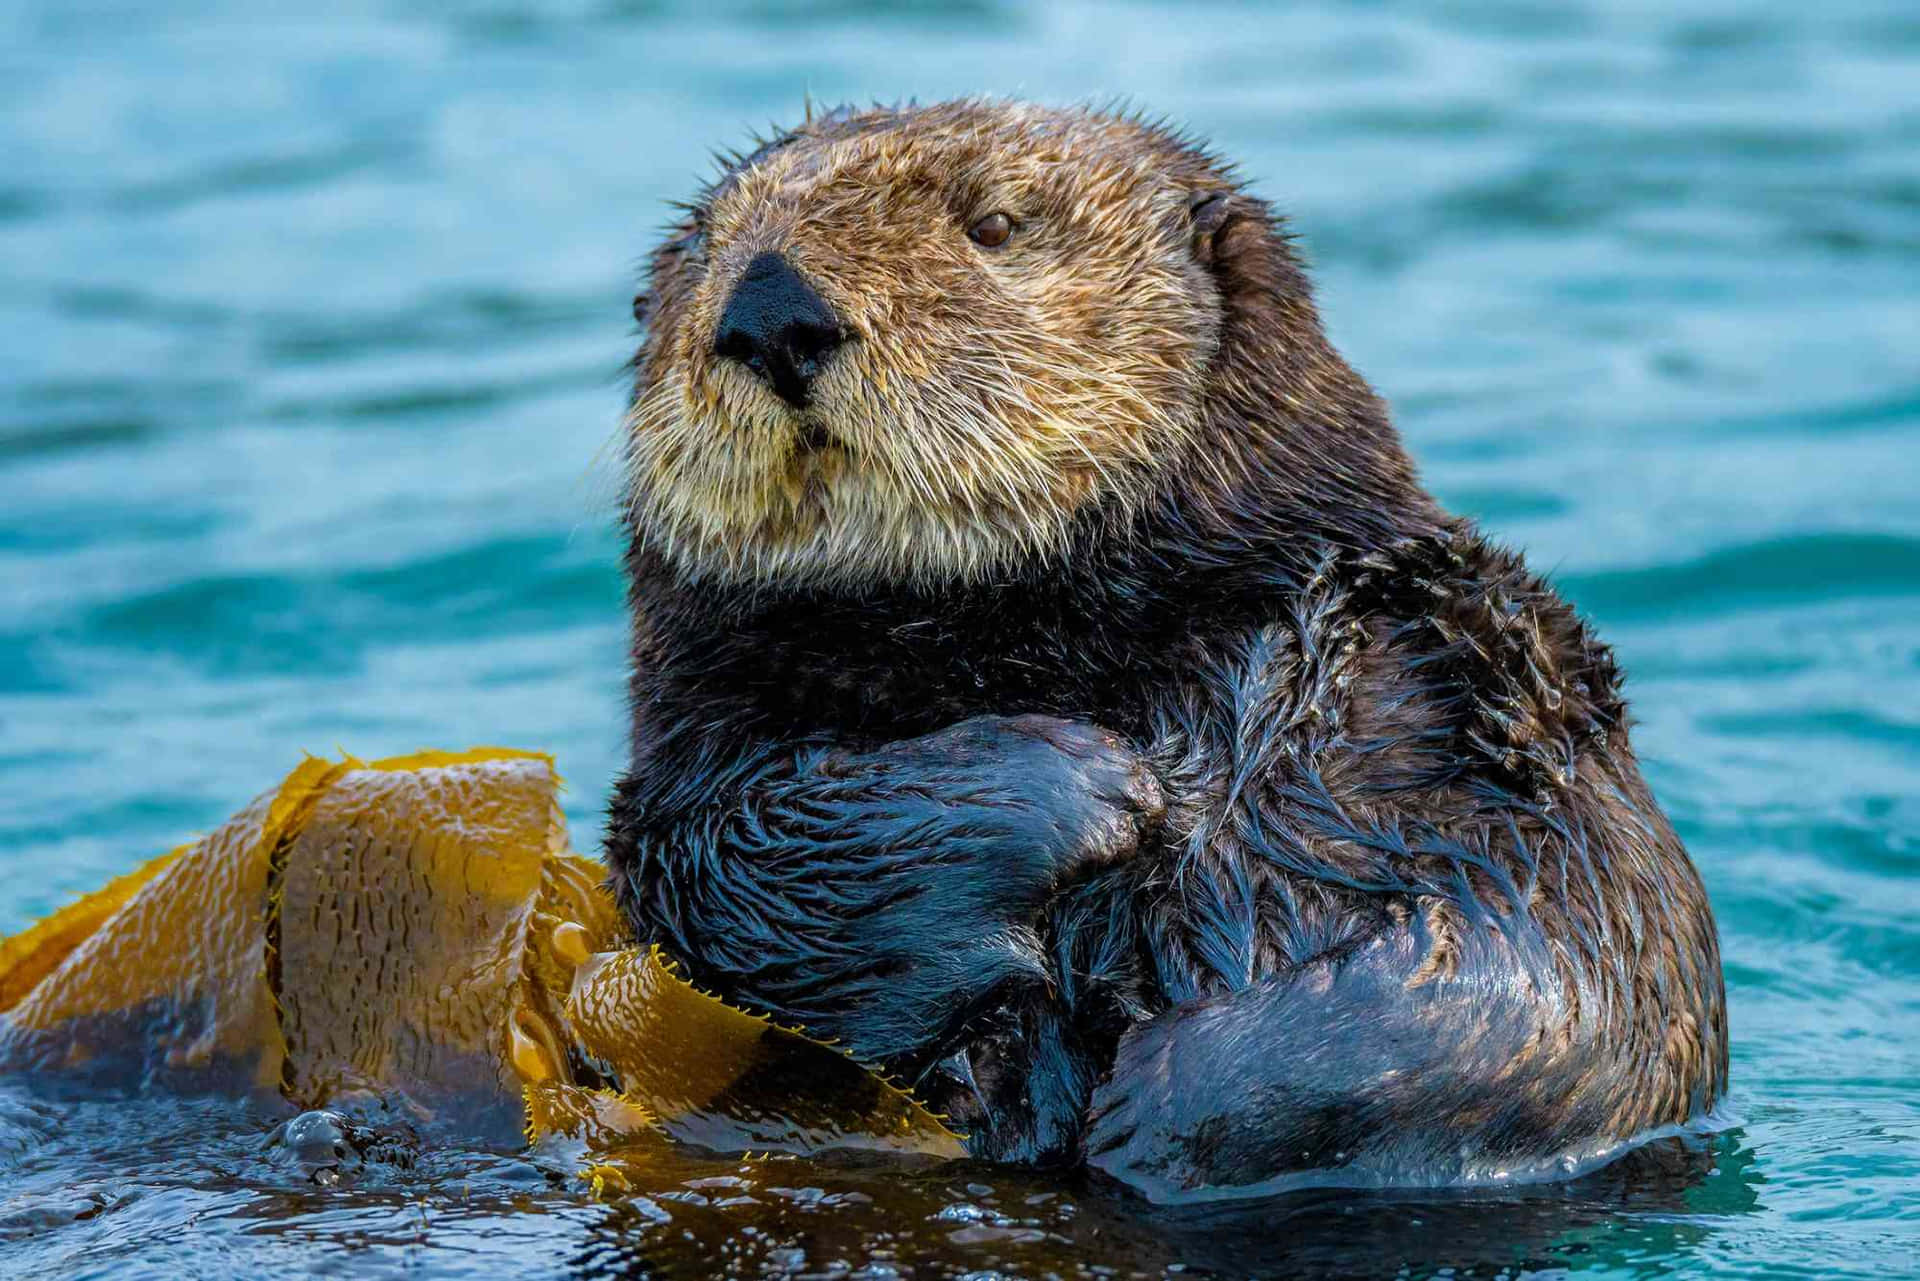 Sea Otter Relaxingwith Kelp.jpg Background